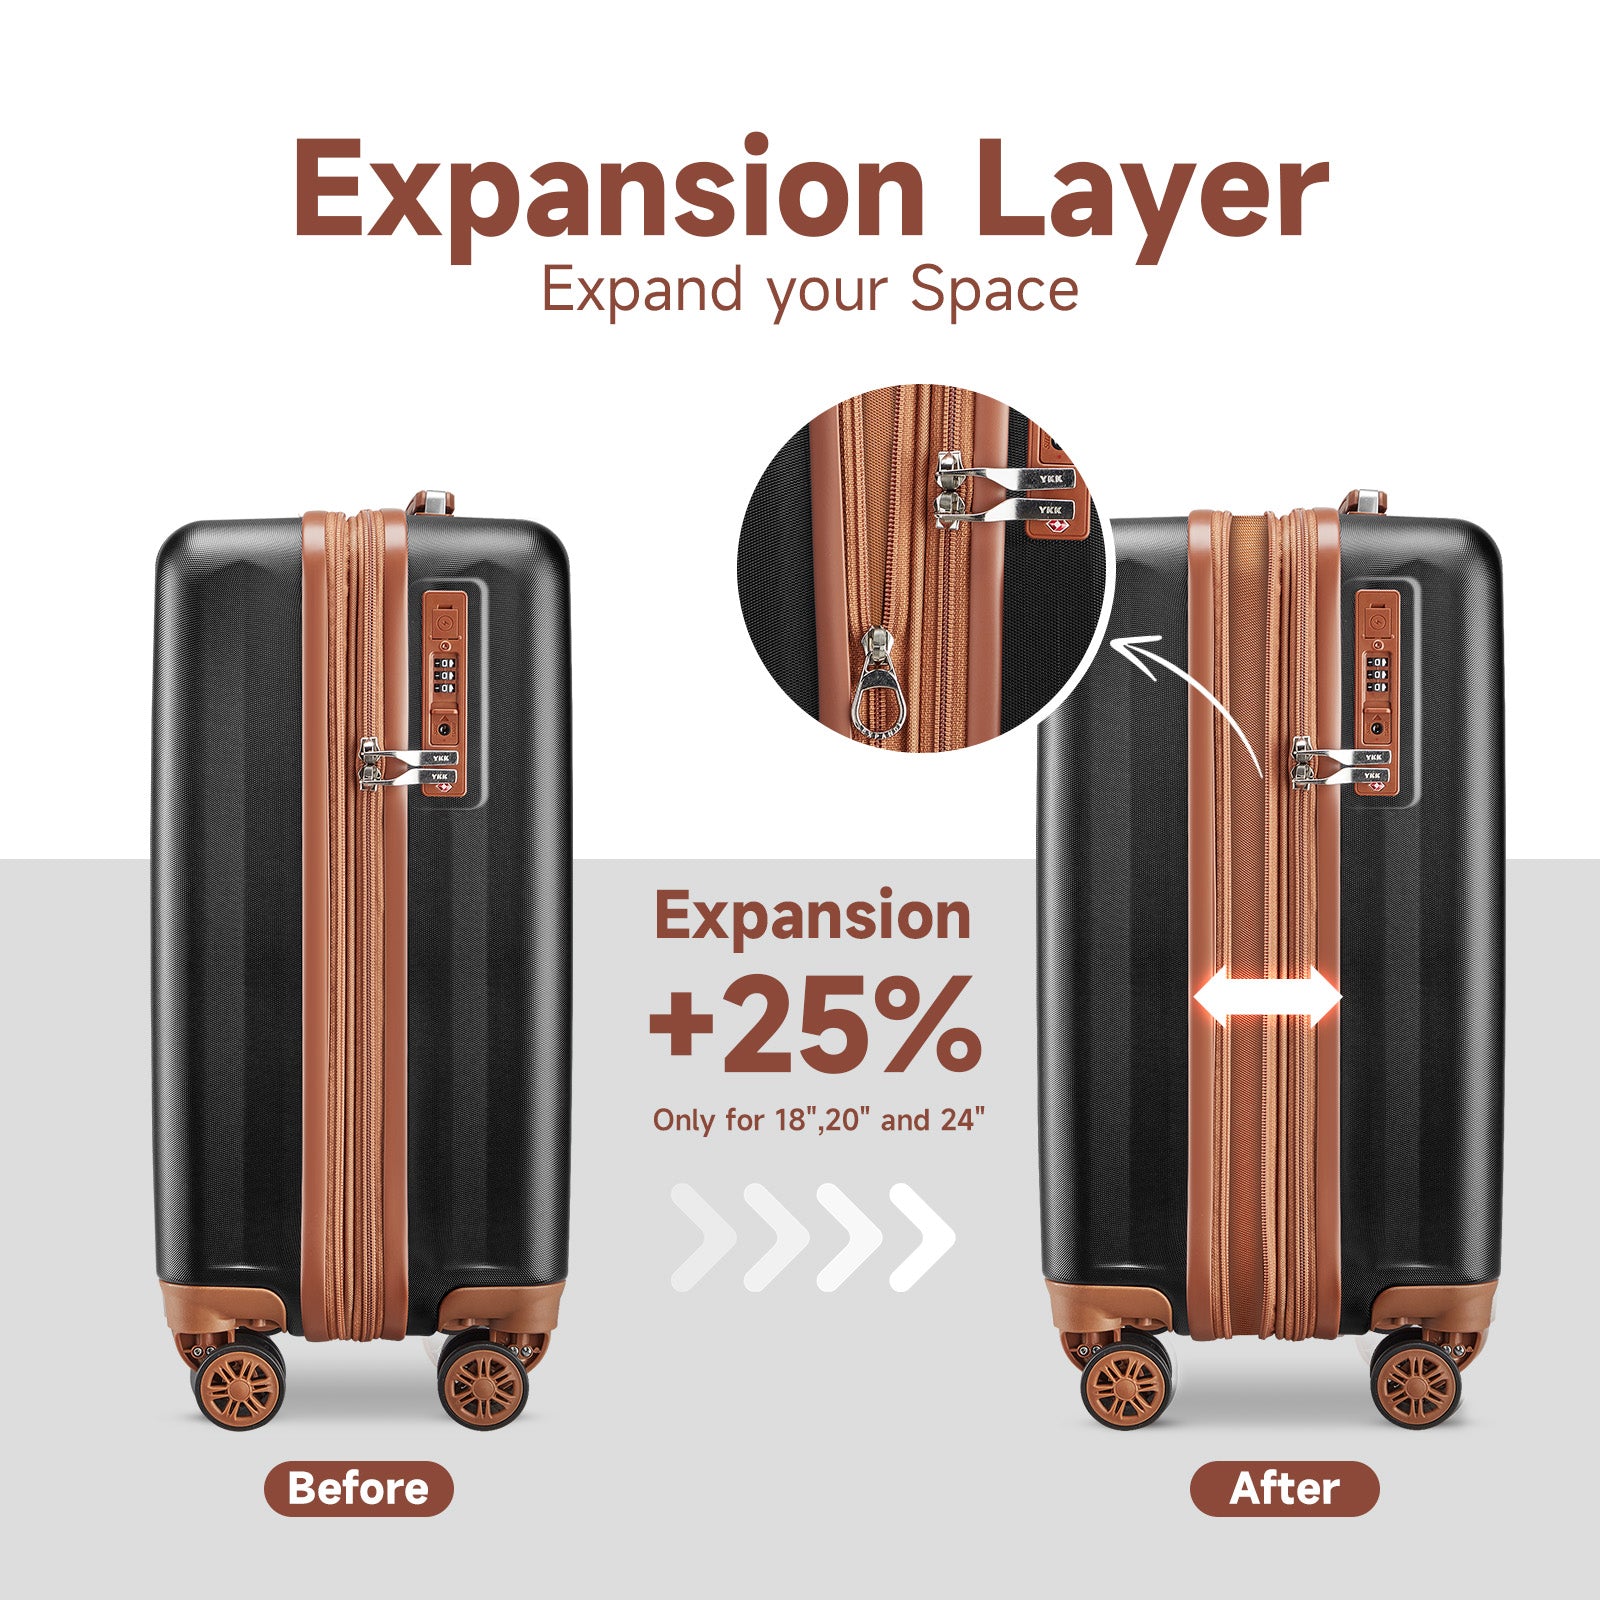 Joyway Luggage Set 3 Piece Suitcase Sets with Spinner Wheel,Hardside  Expandable Travel Laggage with TSA Lock (20/24/28)